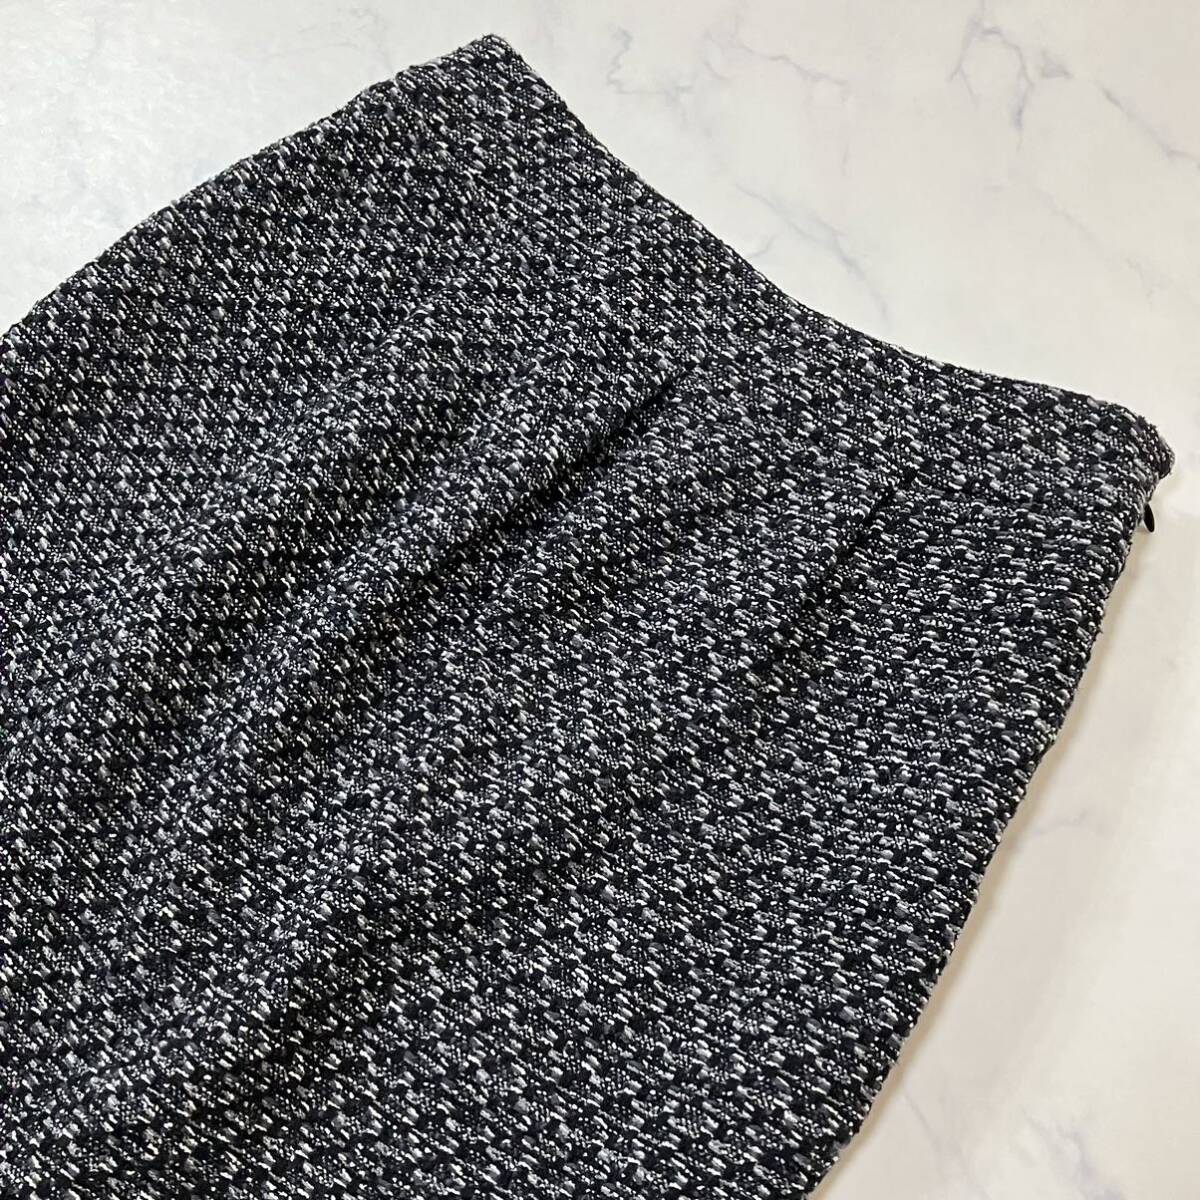 UNTITLED Untitled сделано в Японии твид tuck подкладка имеется Zip юбка до колена черный 2